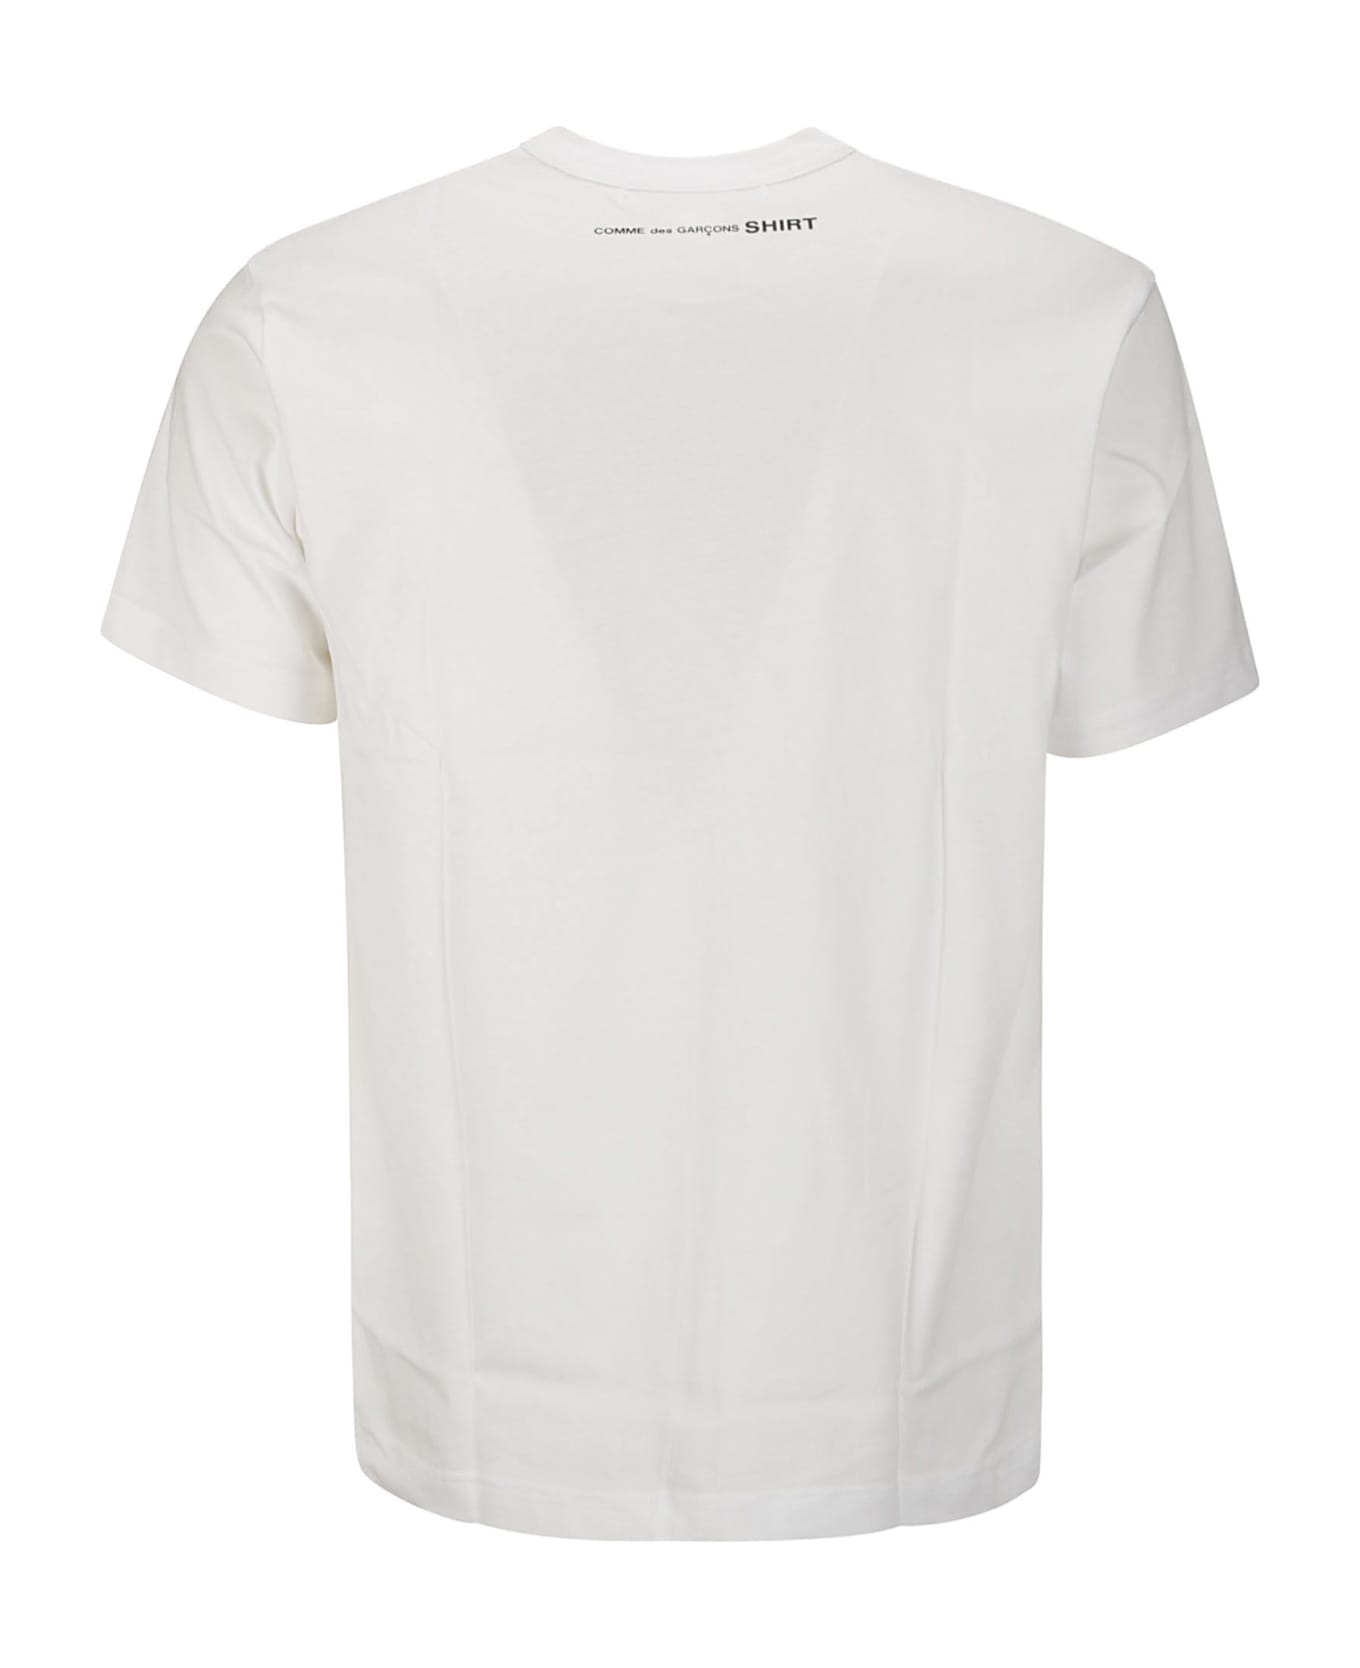 Comme des Garçons Shirt Cotton Jersey Plain With Printed Cdg Shirt L - WHITE